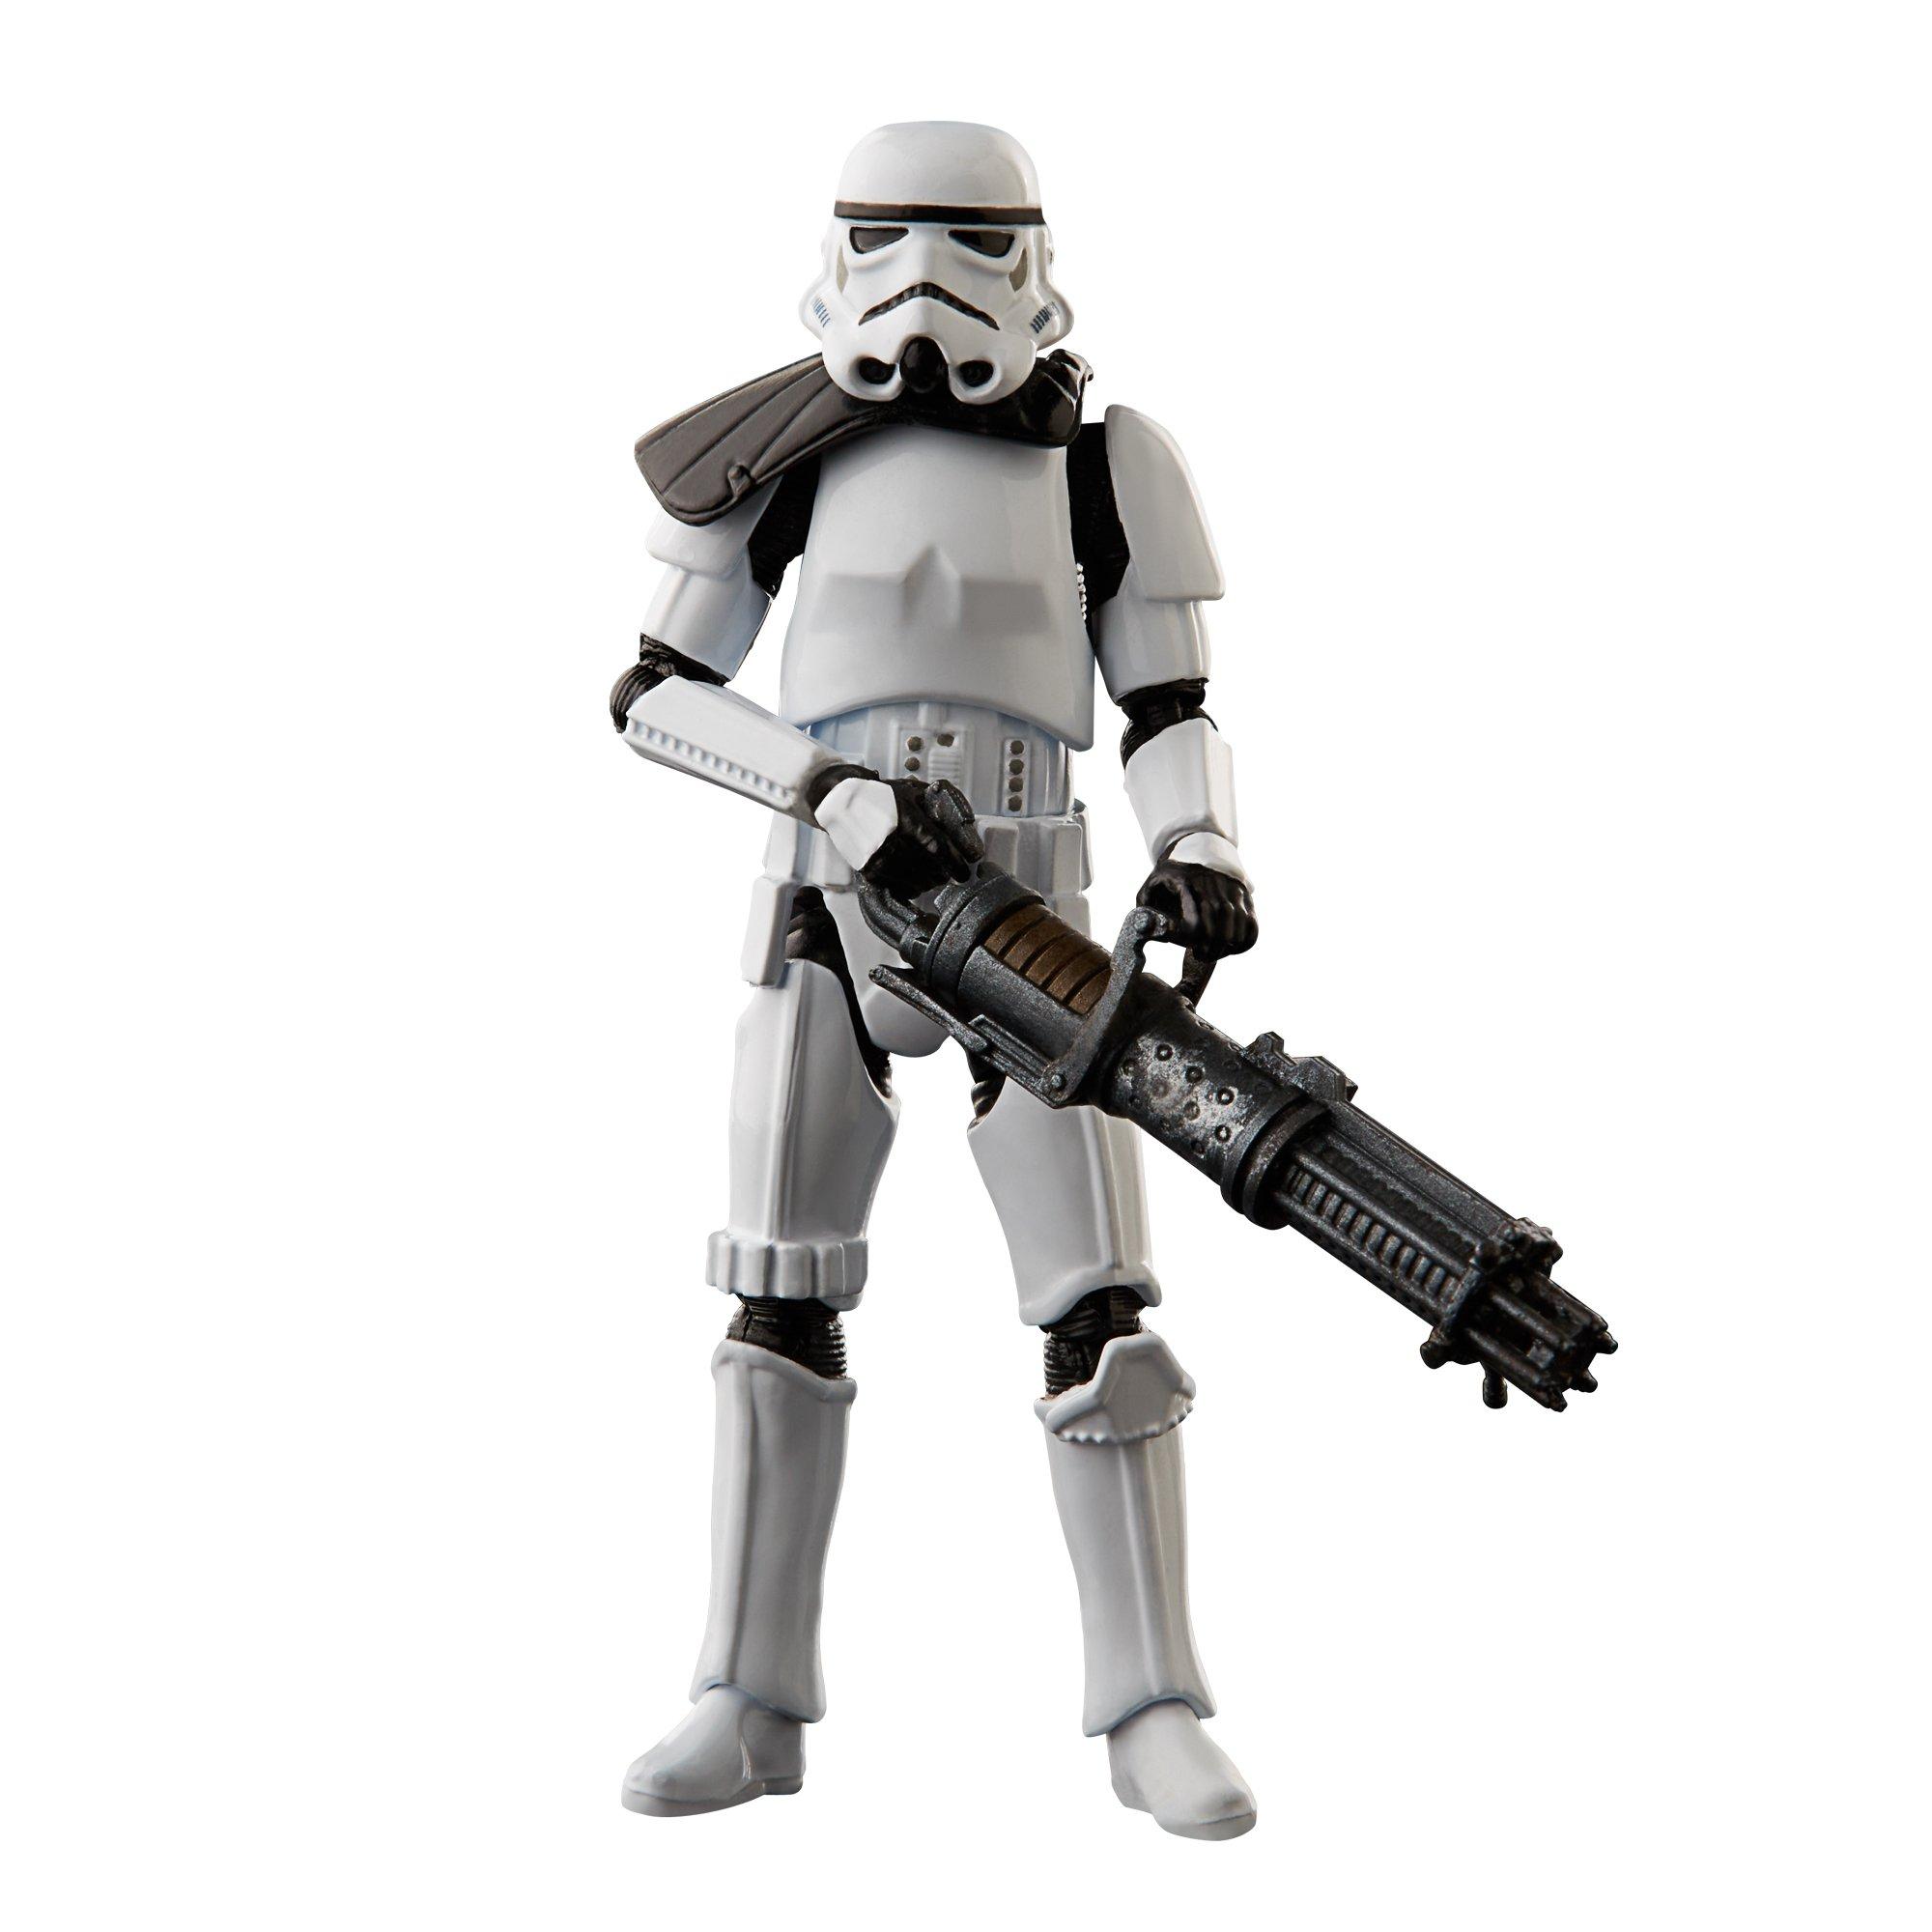 Hasbro Star Wars Rebels Stormtrooper Action Figure for sale online 